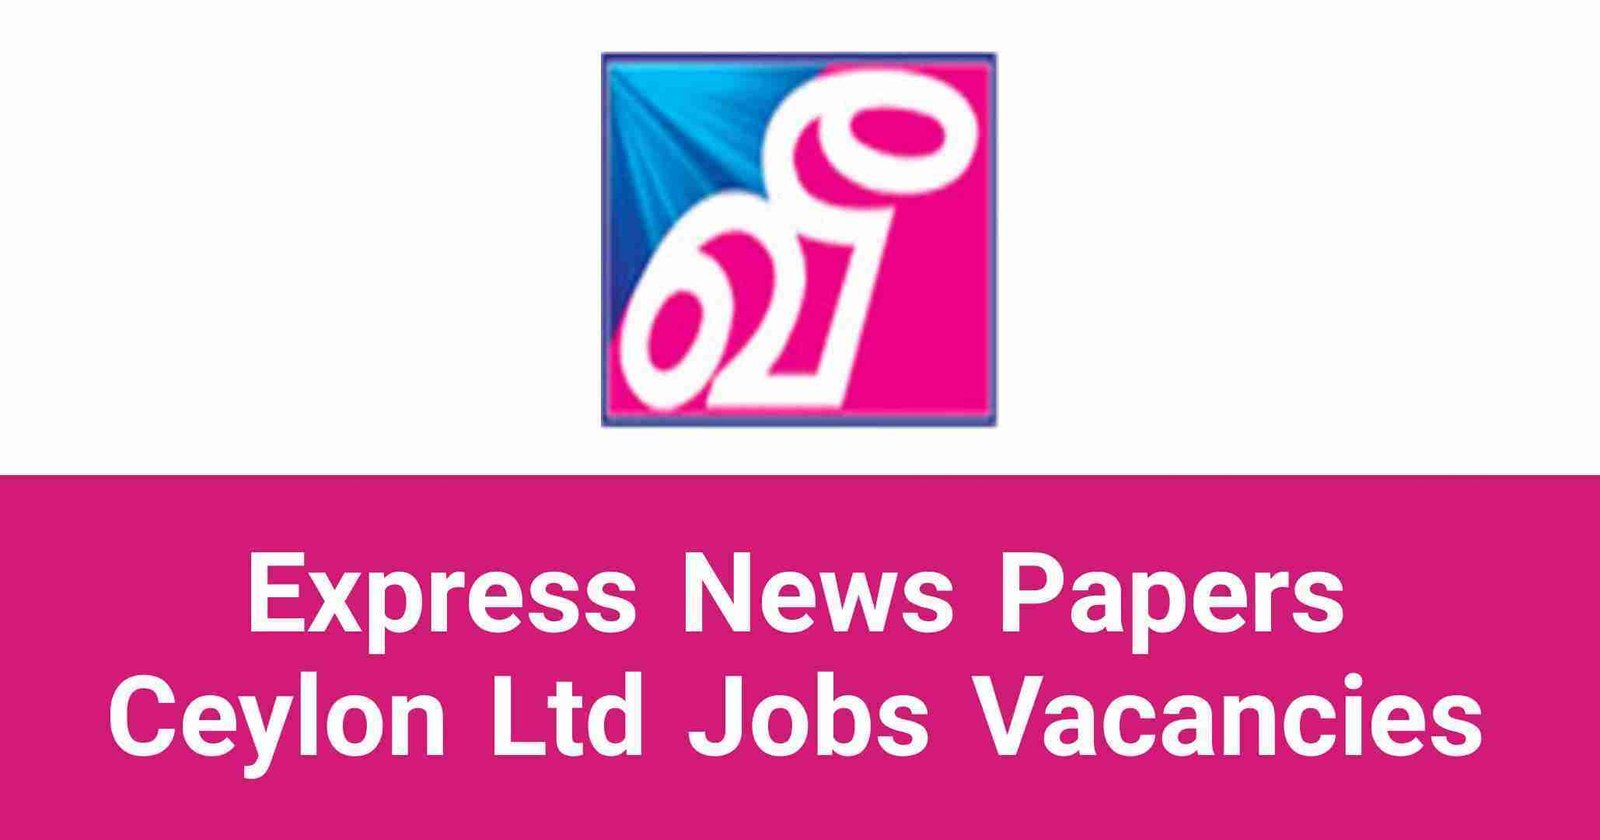 Express News Papers Ceylon Ltd Jobs Vacancies